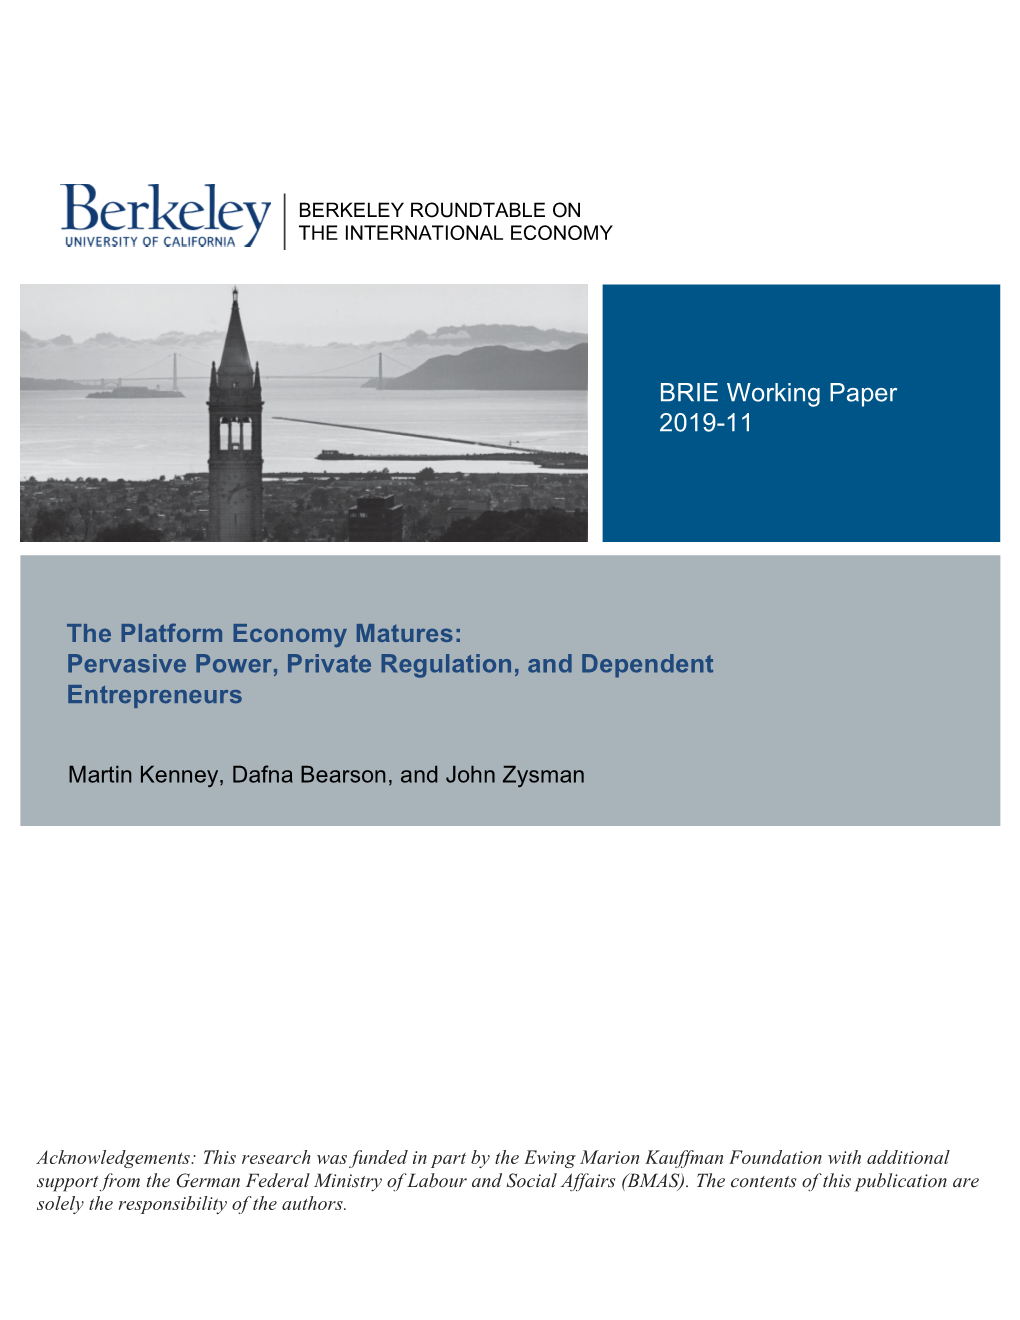 The Platform Economy Matures: Pervasive Power, Private Regulation, and Dependent Entrepreneurs